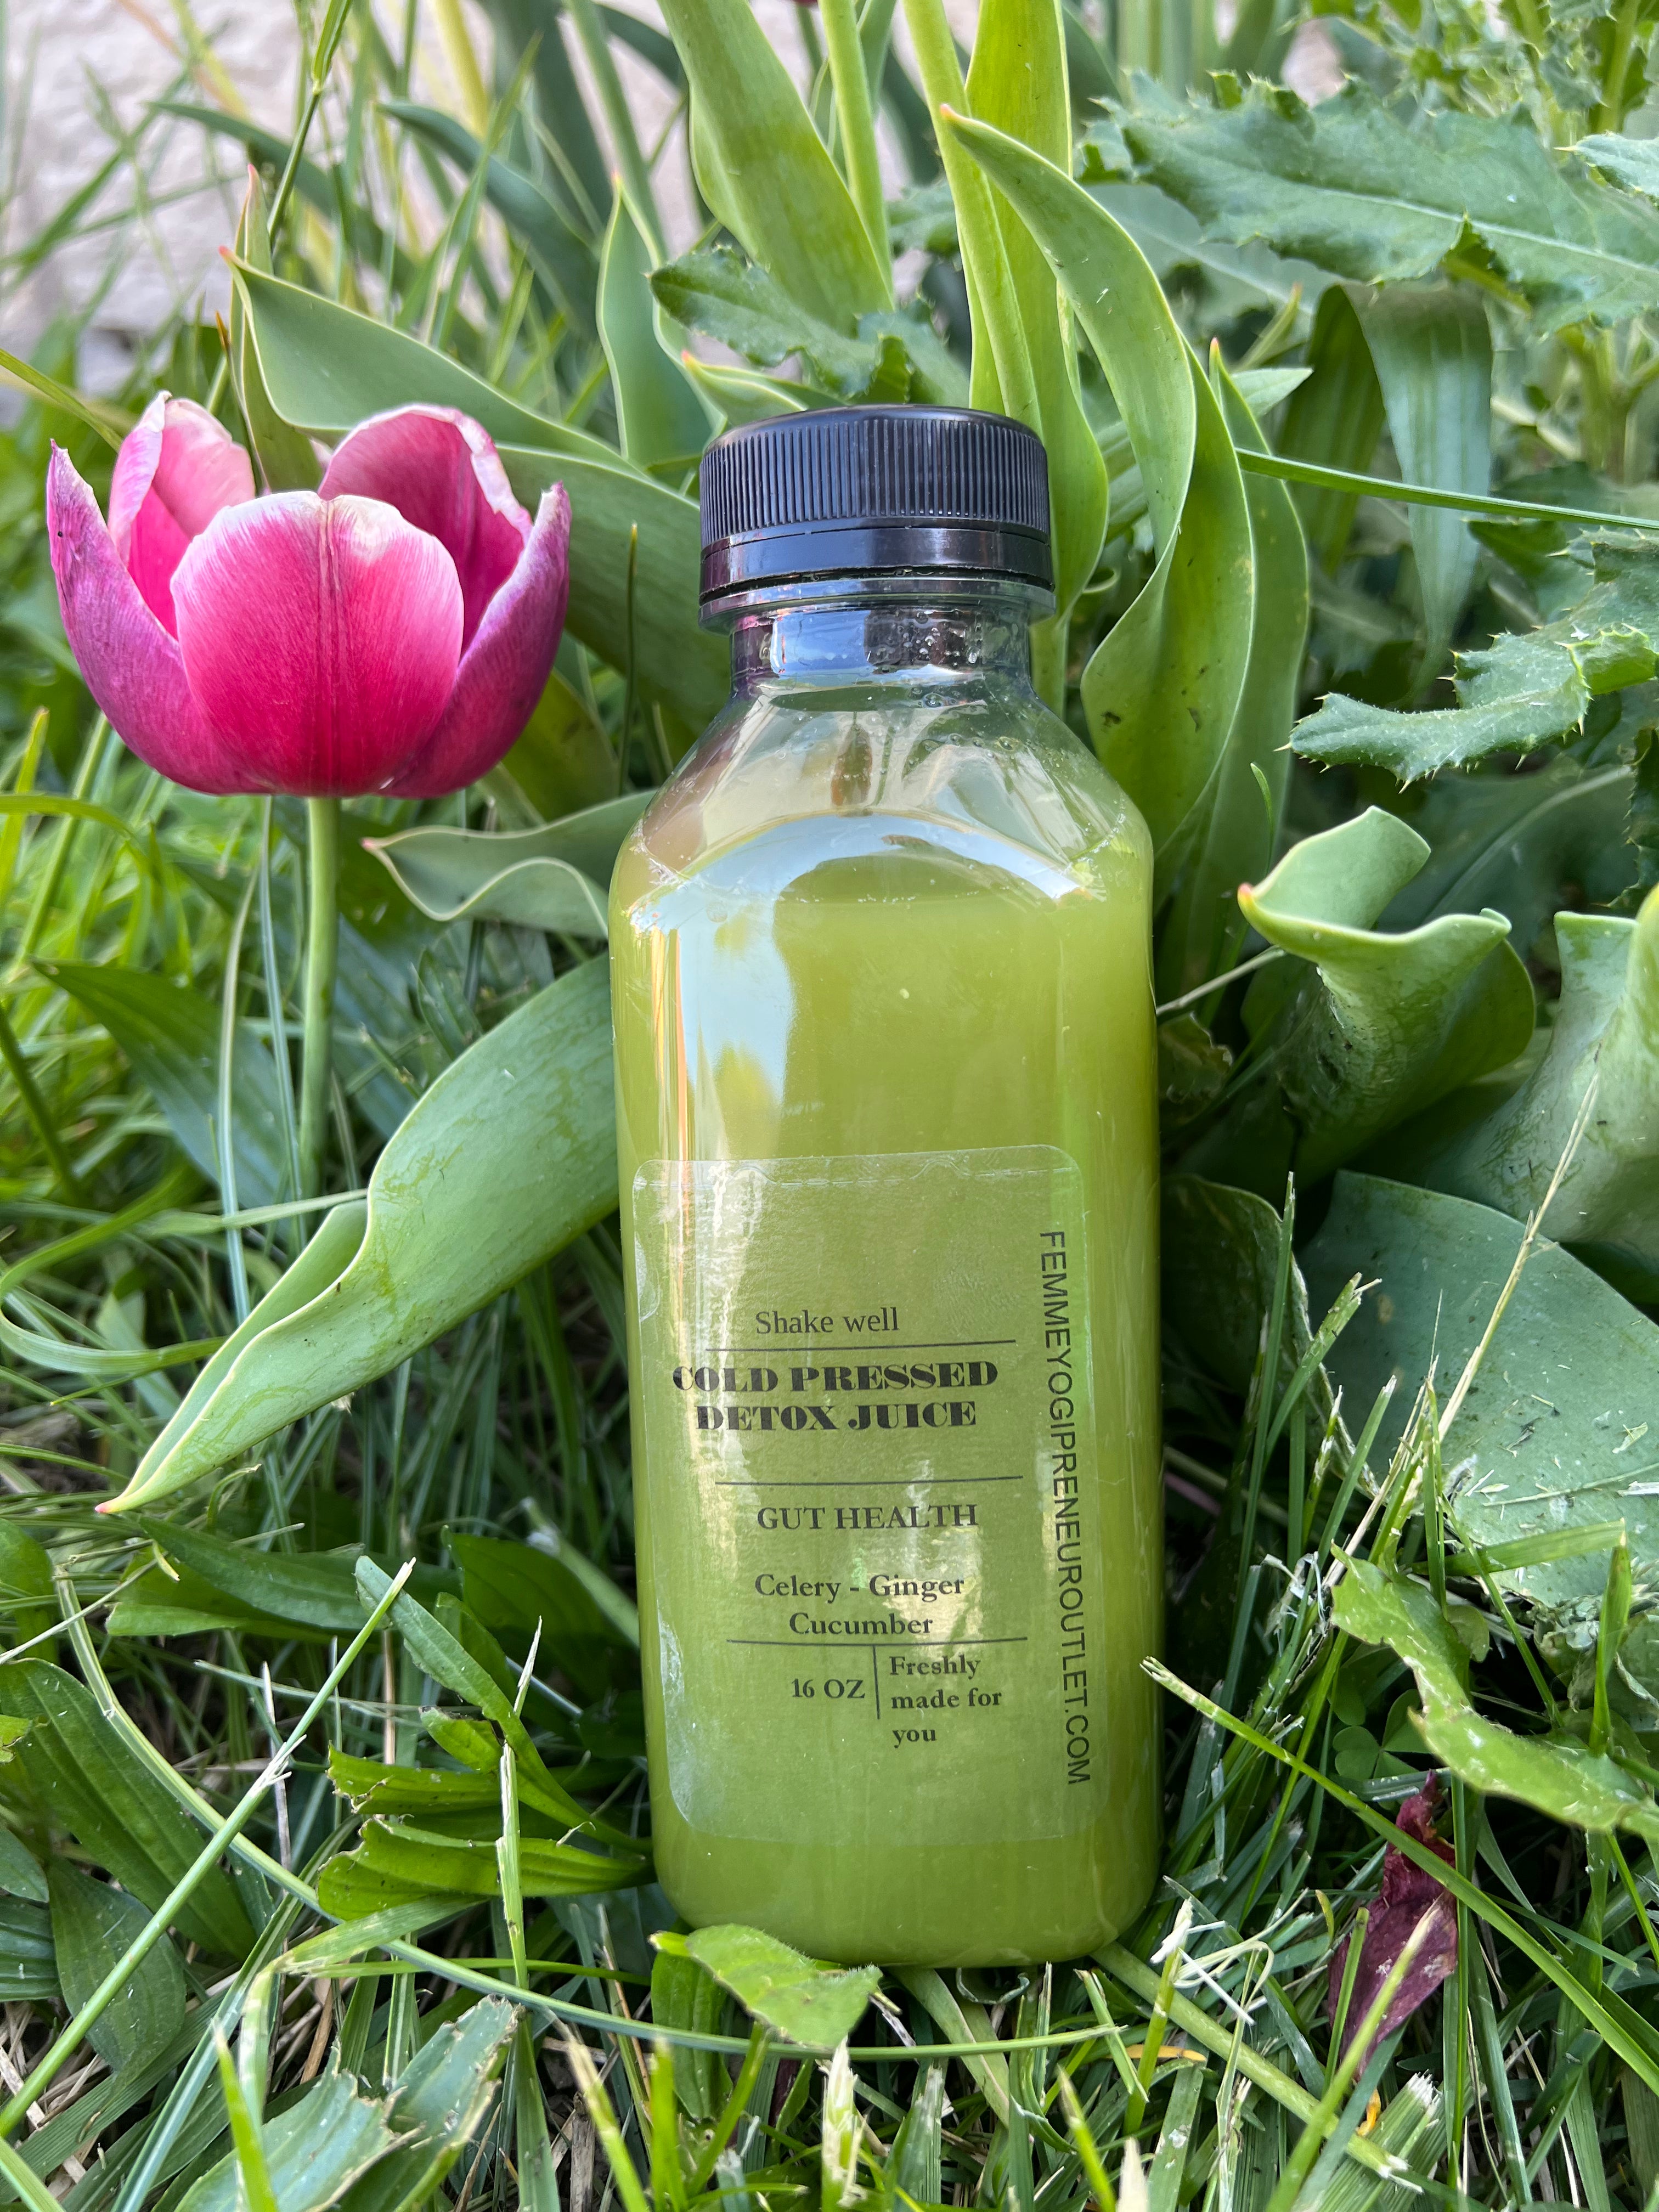 Green juice cleanse - Gut health drink - 16 oz